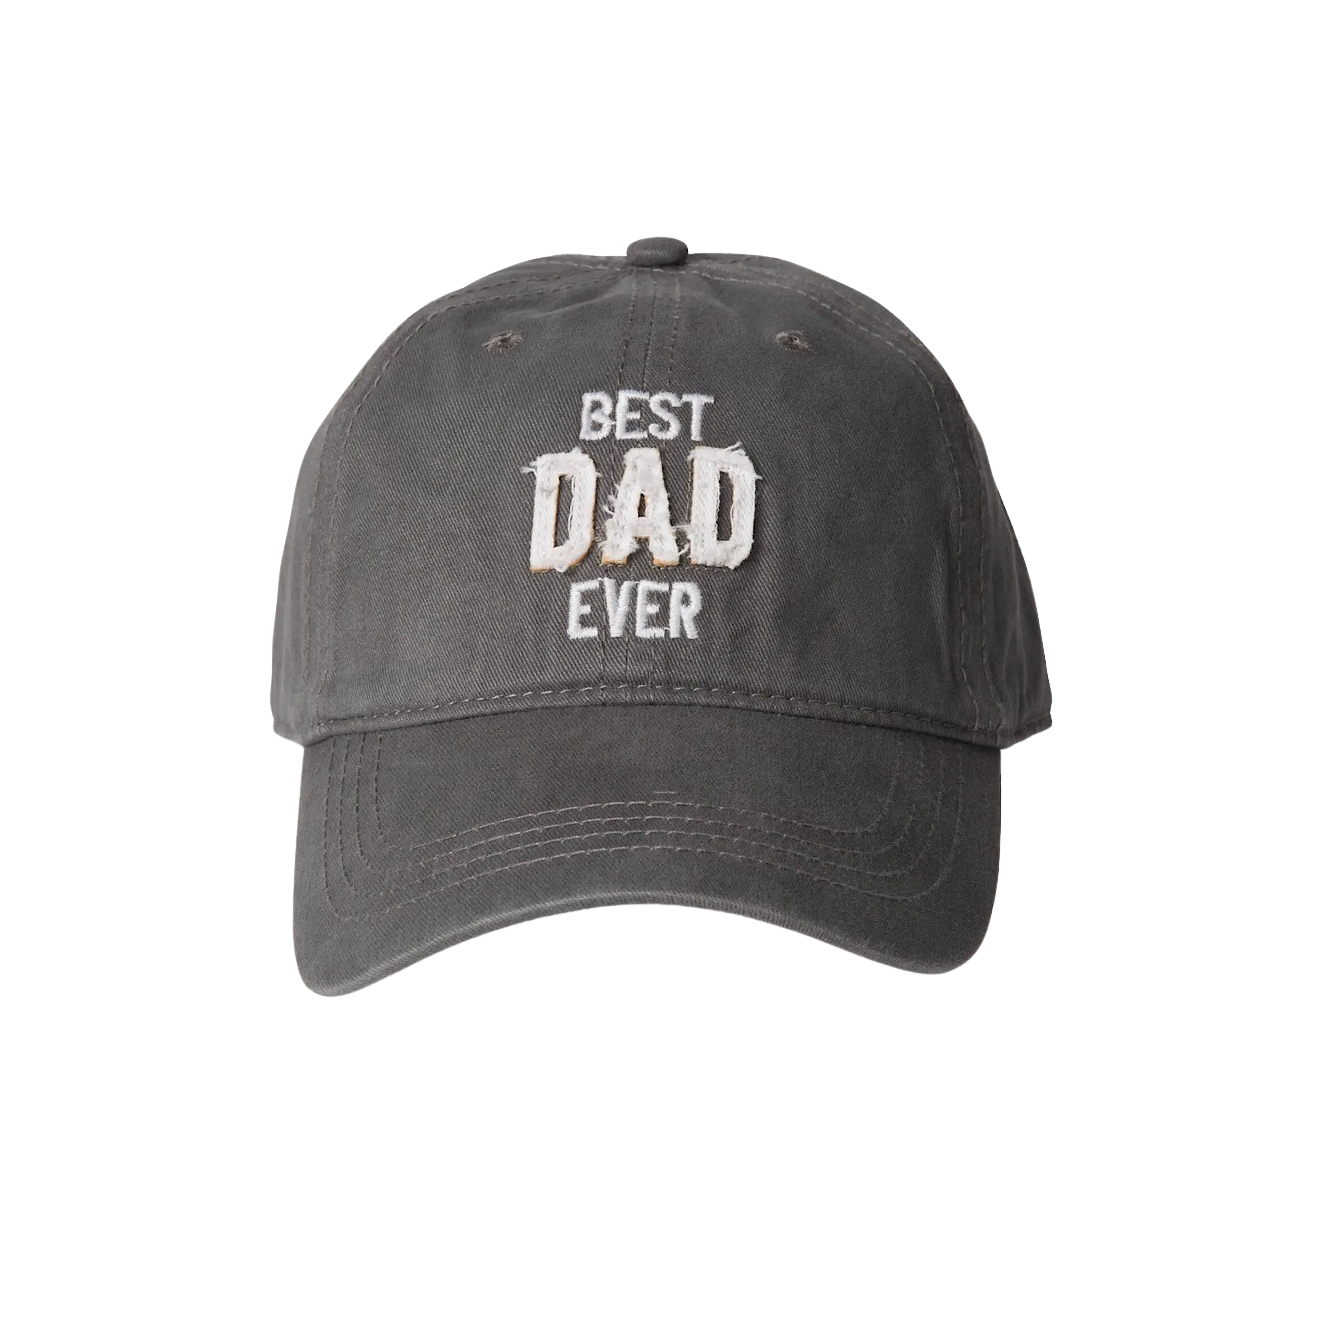 Father's Day Caps & Hats, Unique Designs